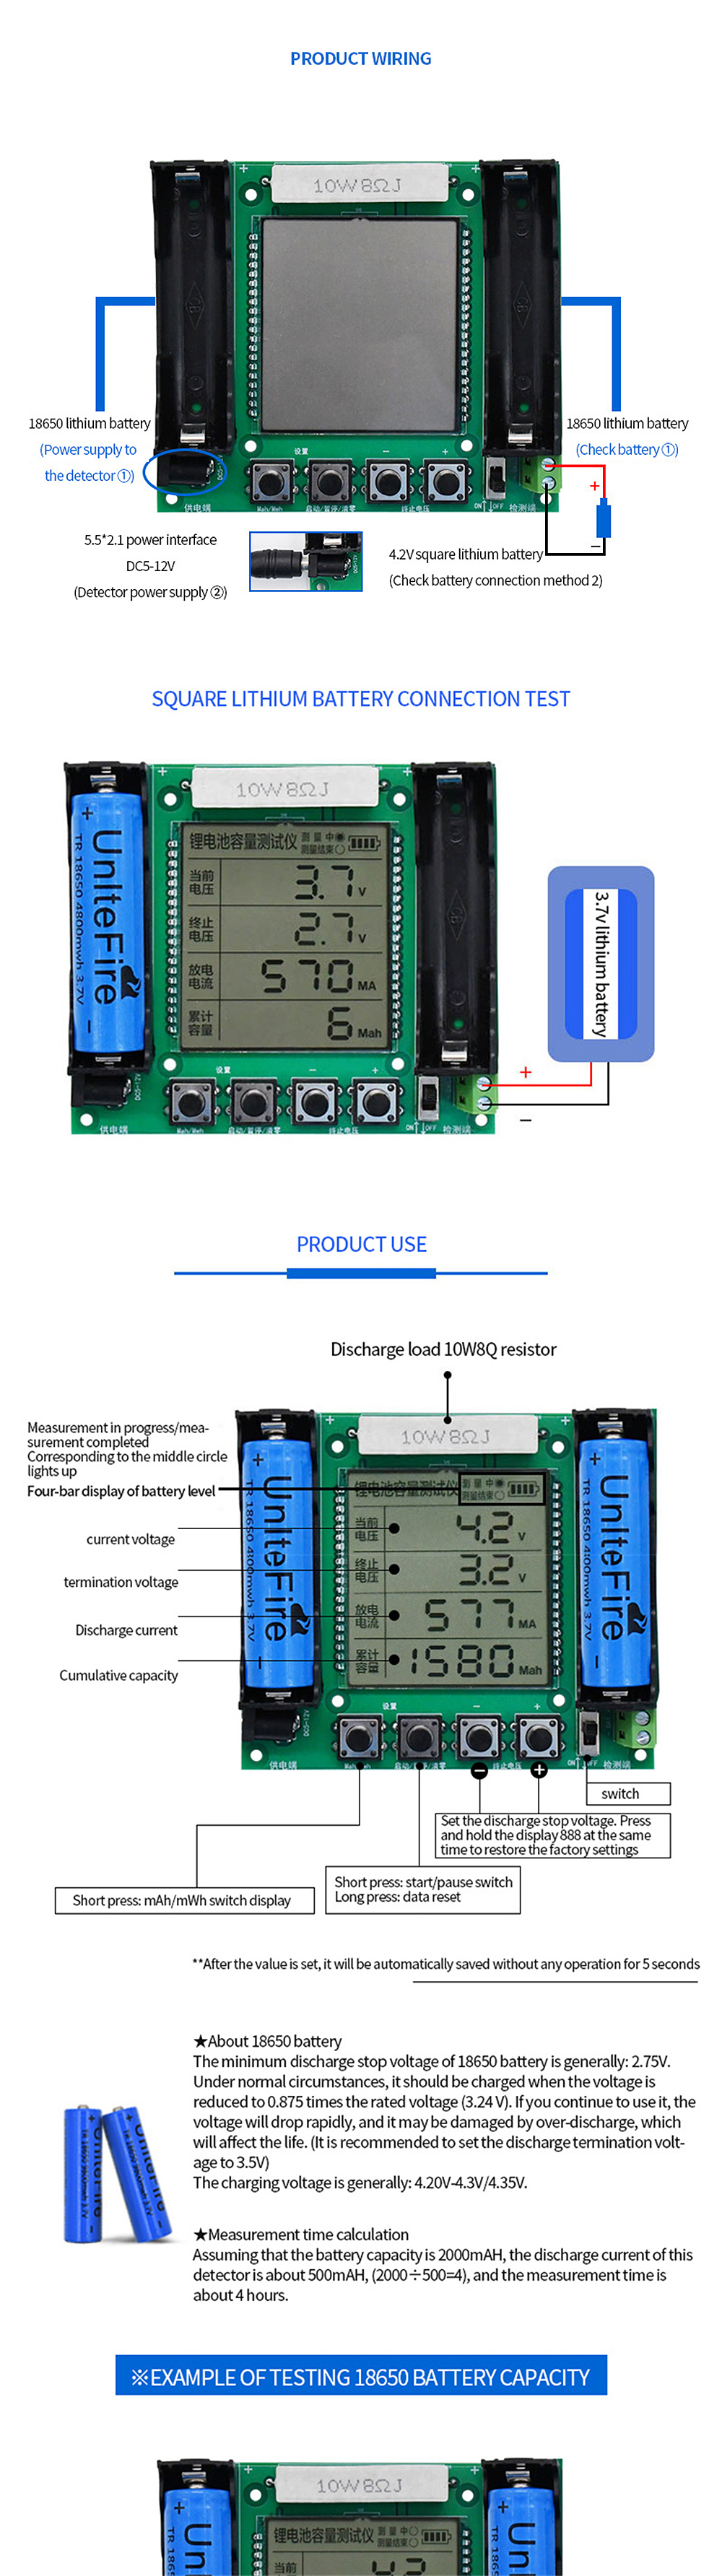 18650-Lithium-Battery-Capacity-Tester-Module-High-Precision-LCD-Digital-Display-MaHmwH-Measurement-T-1973537-1